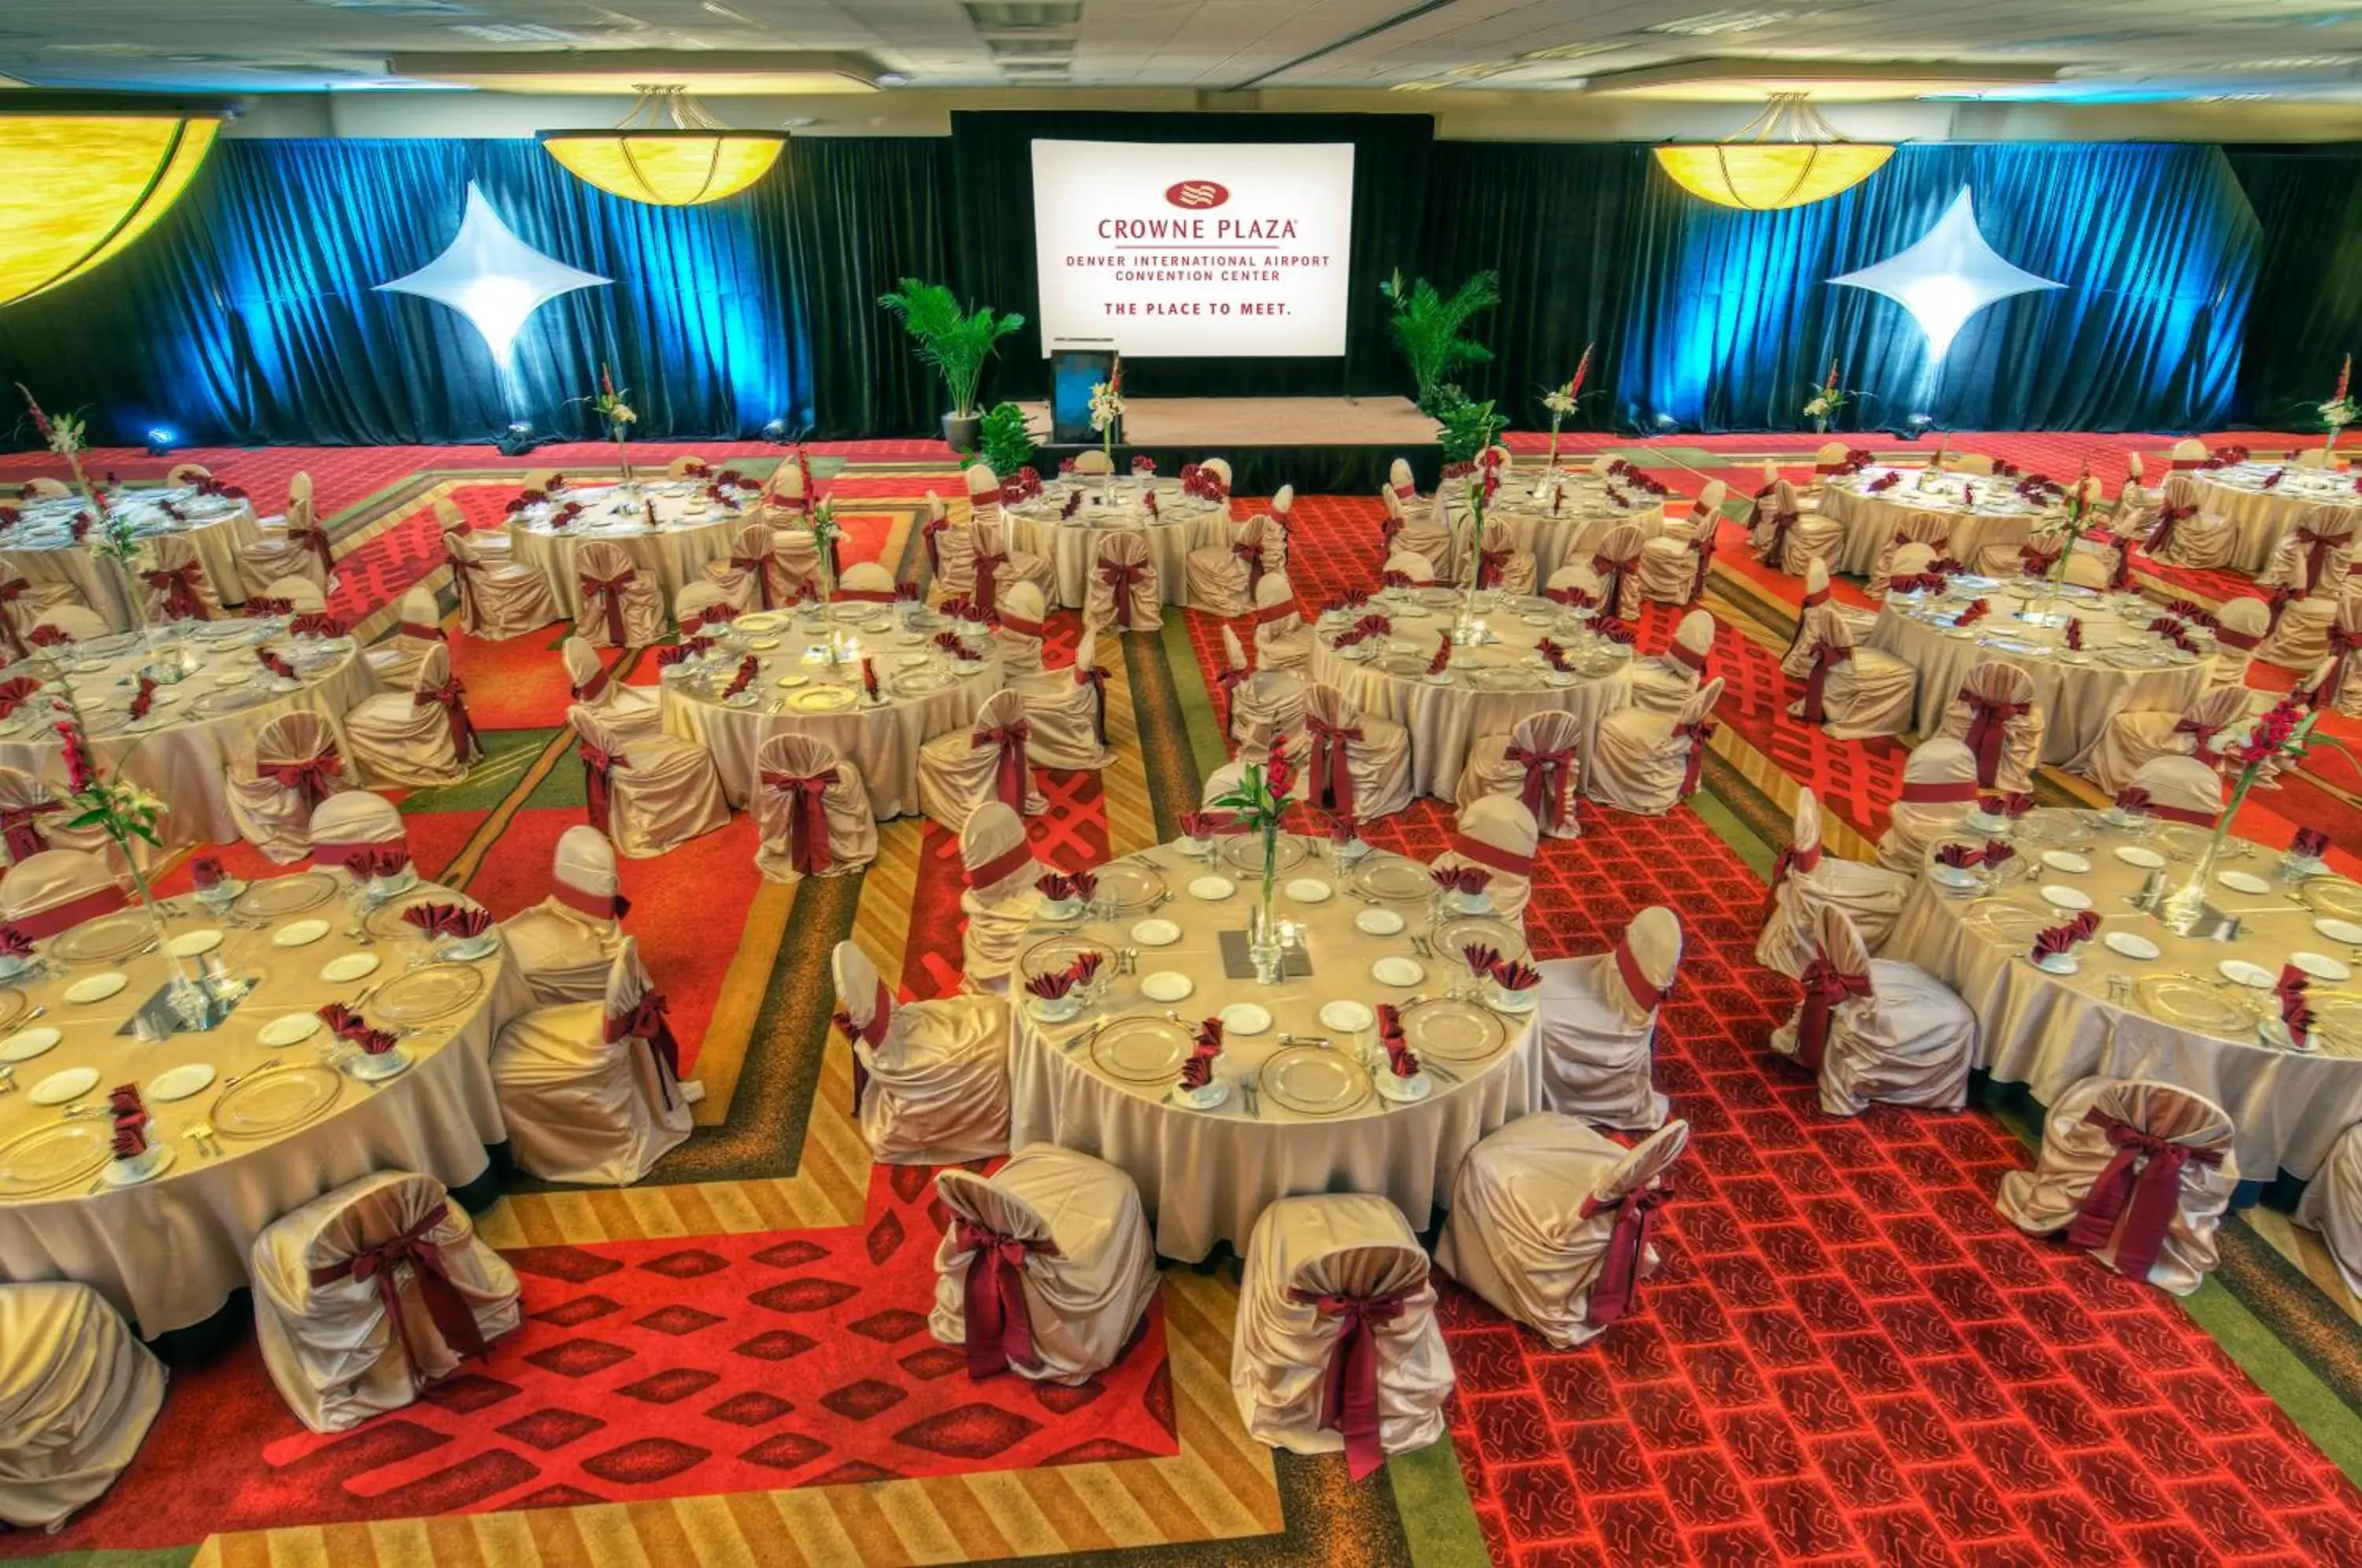 Banquet/Function facilities, Banquet Facilities in Crowne Plaza Denver International Airport, an IHG Hotel